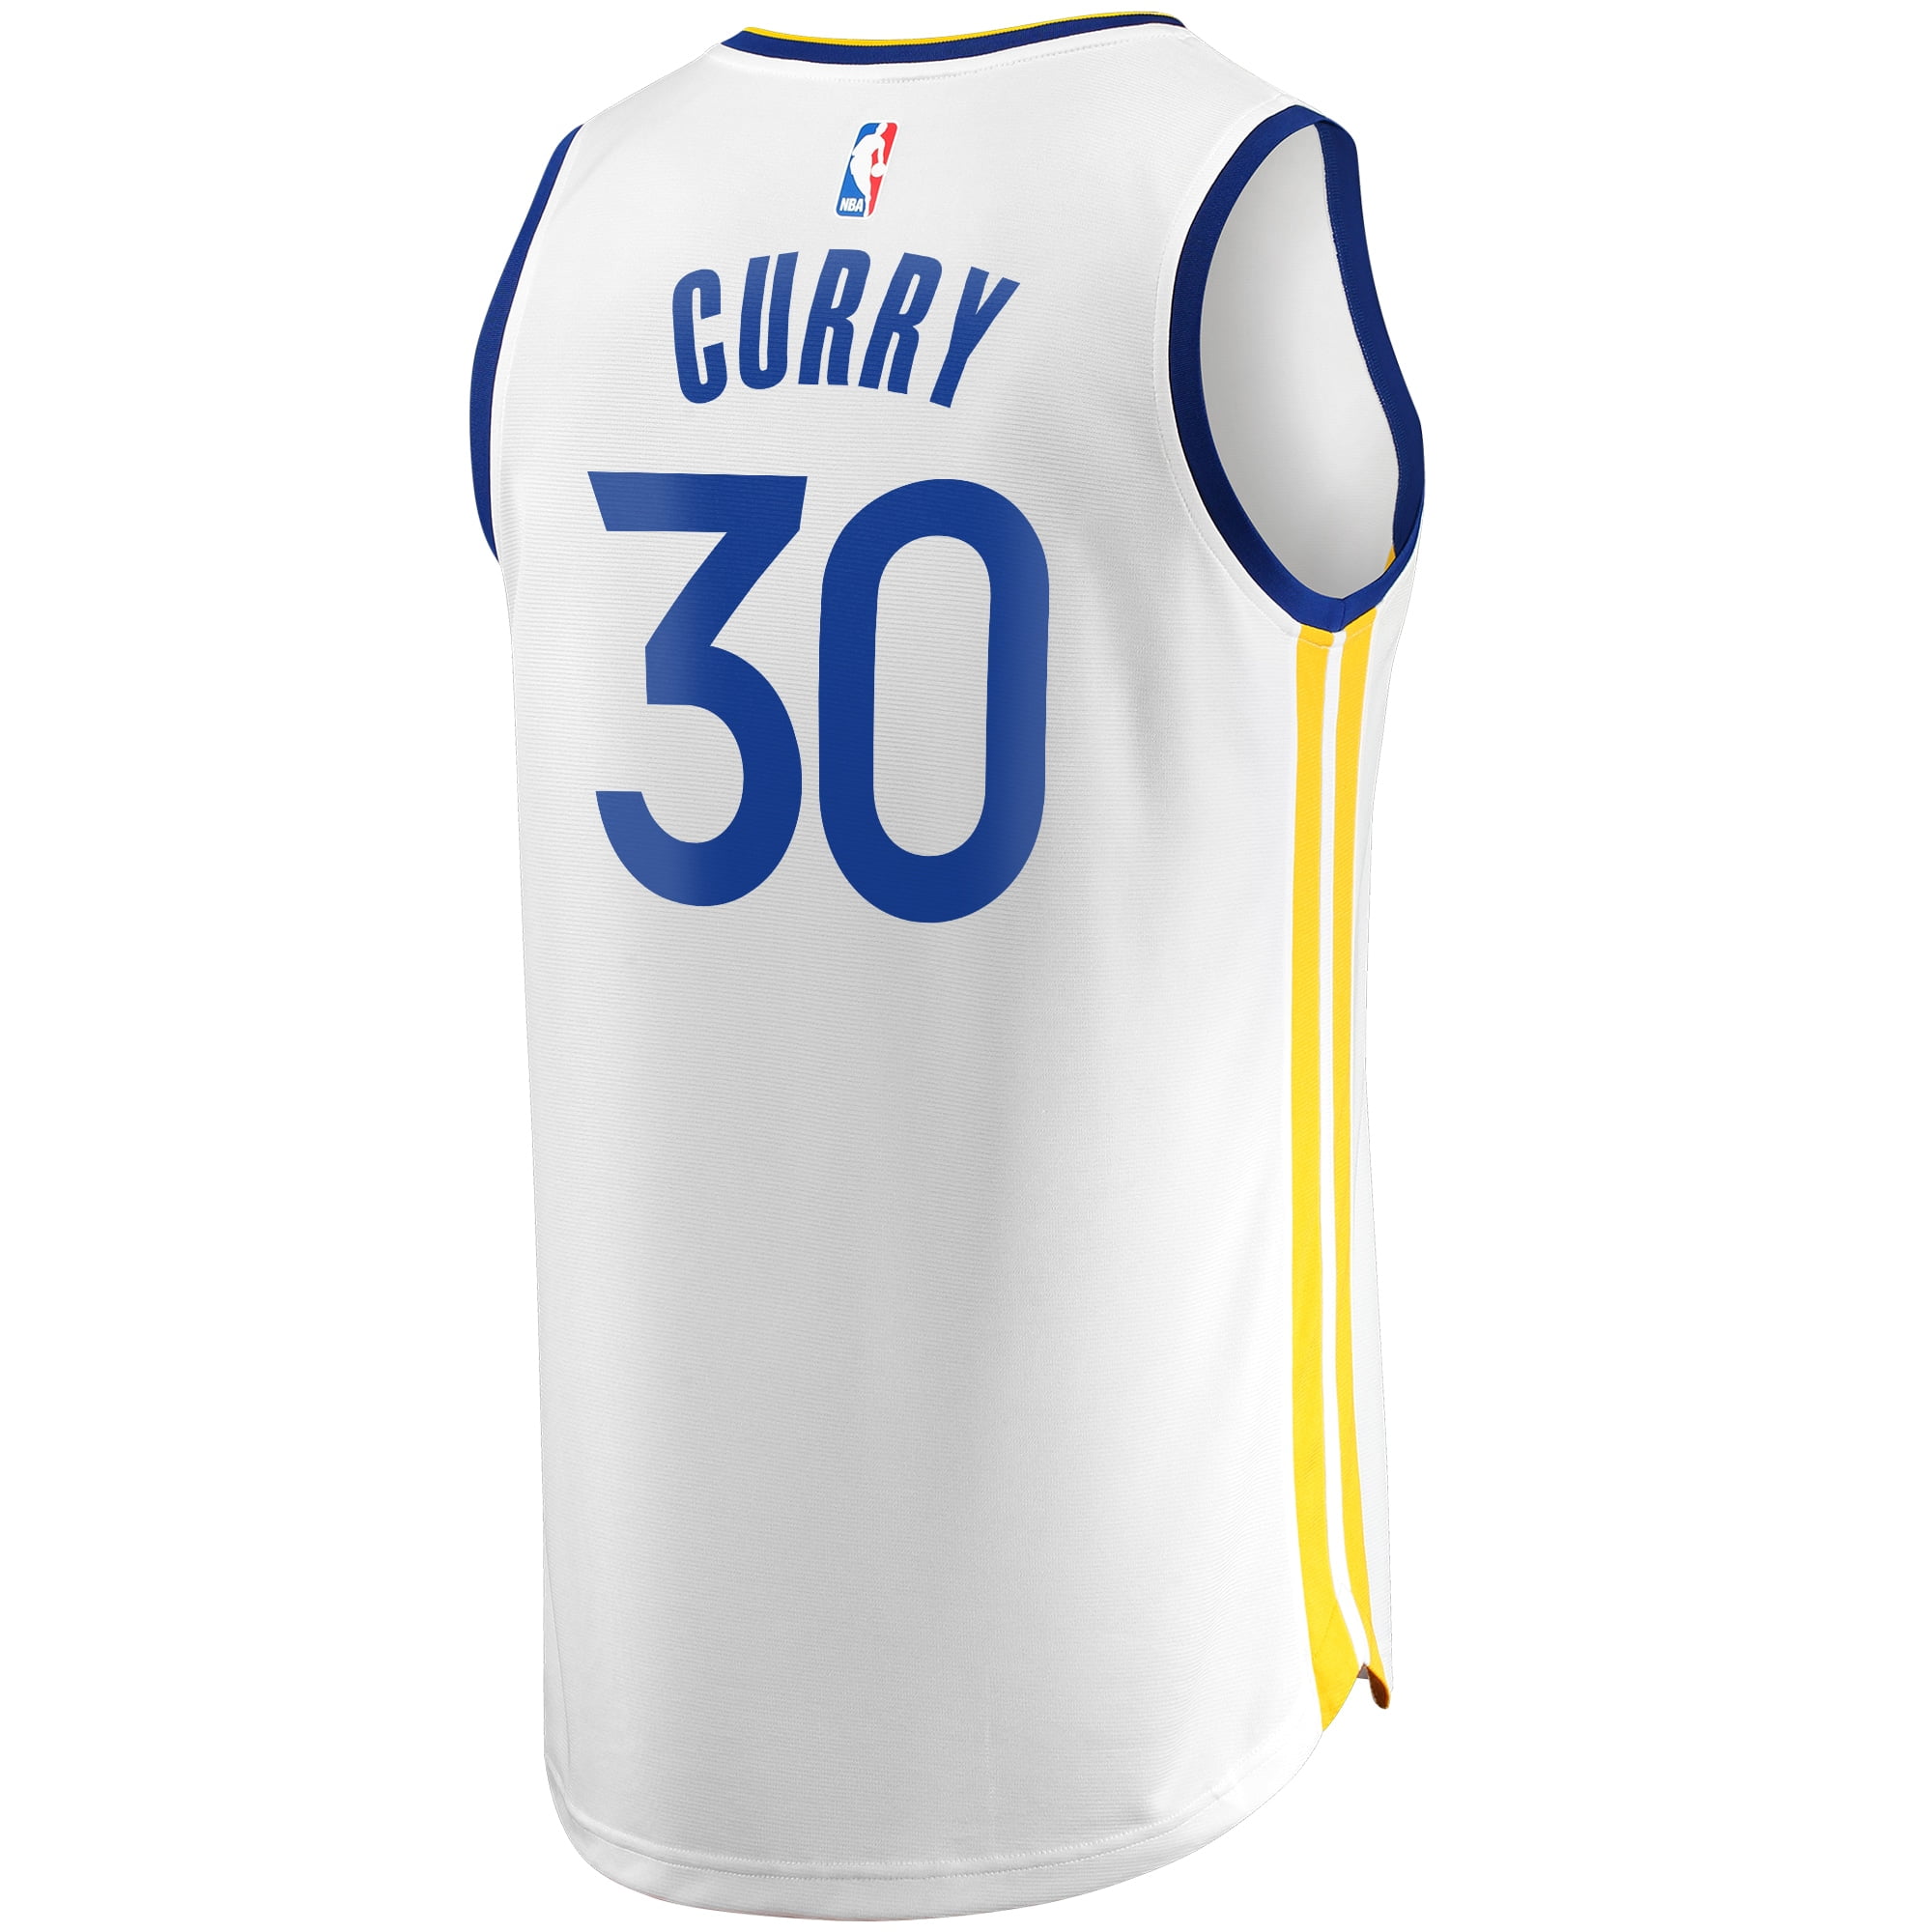 Warriors Curry custom jersey